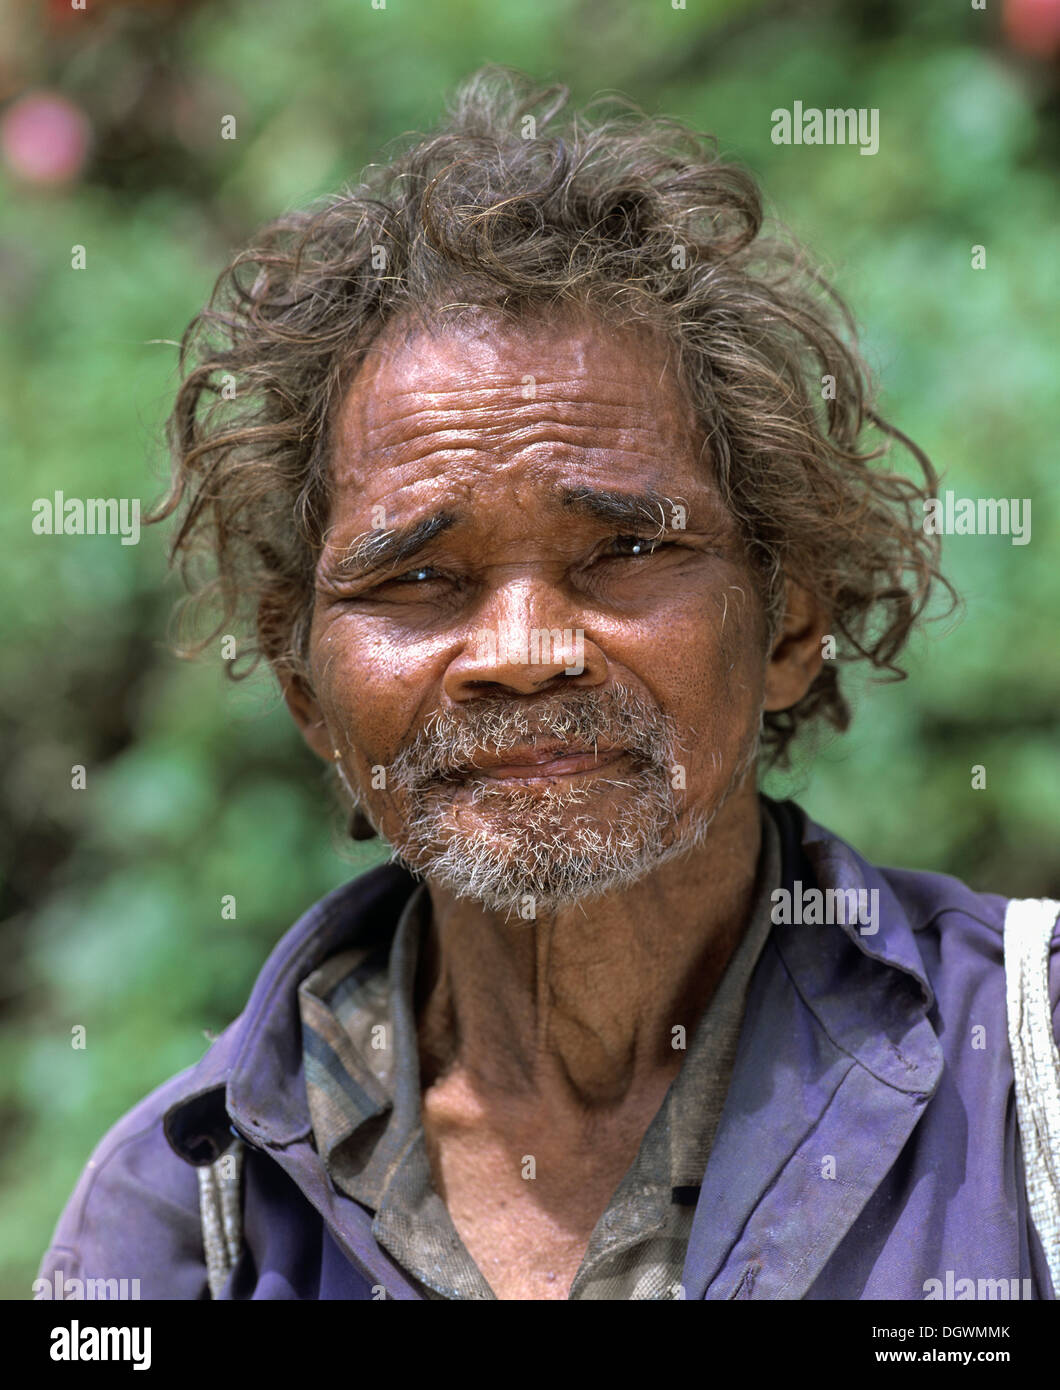 Man of the ethnic group of the <b>Orang Asli</b> people, portrait, ... - man-of-the-ethnic-group-of-the-orang-asli-people-portrait-cameron-DGWMMK